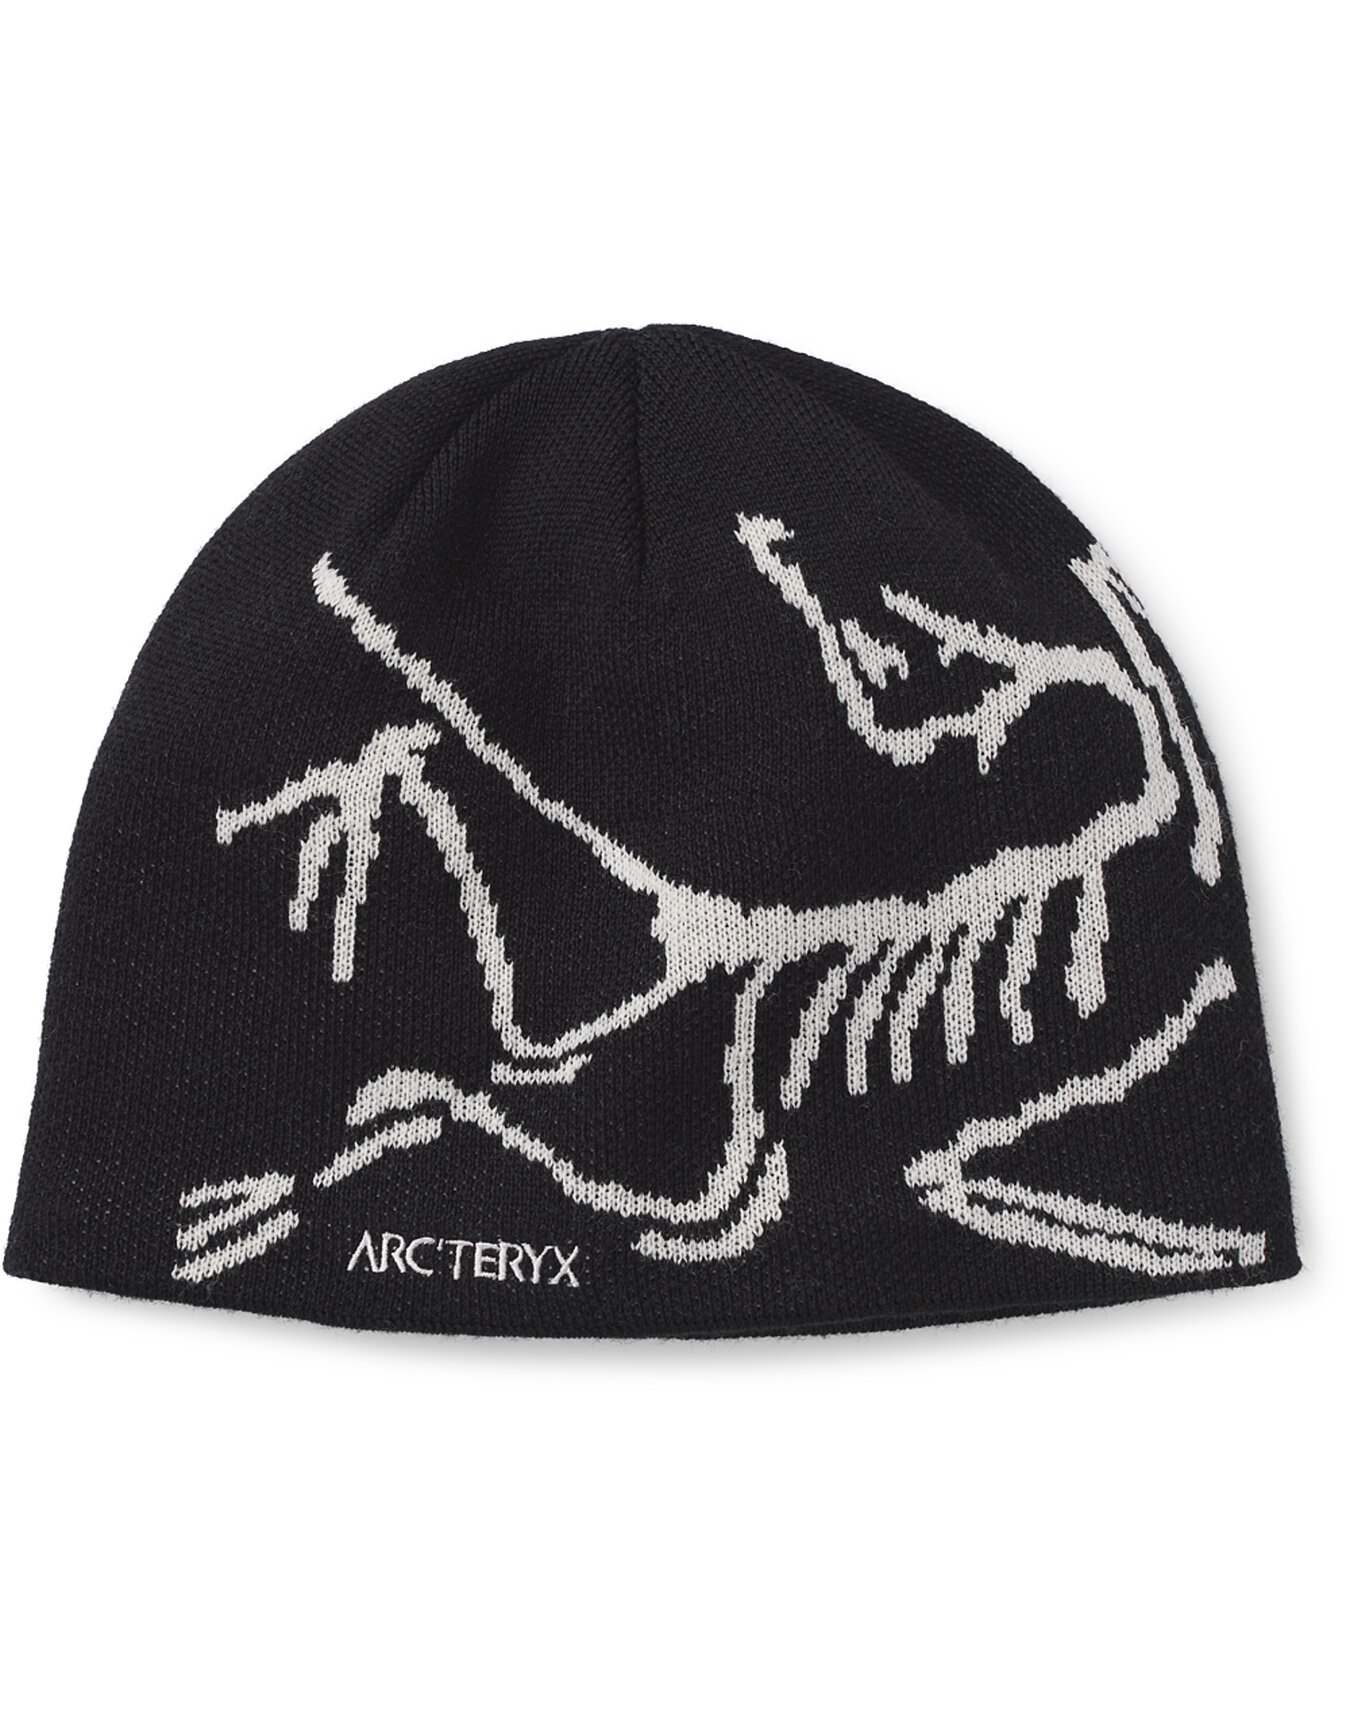 ARCTERYX(アークテリクス) BIRD HEAD TOQUE メンズ 帽子